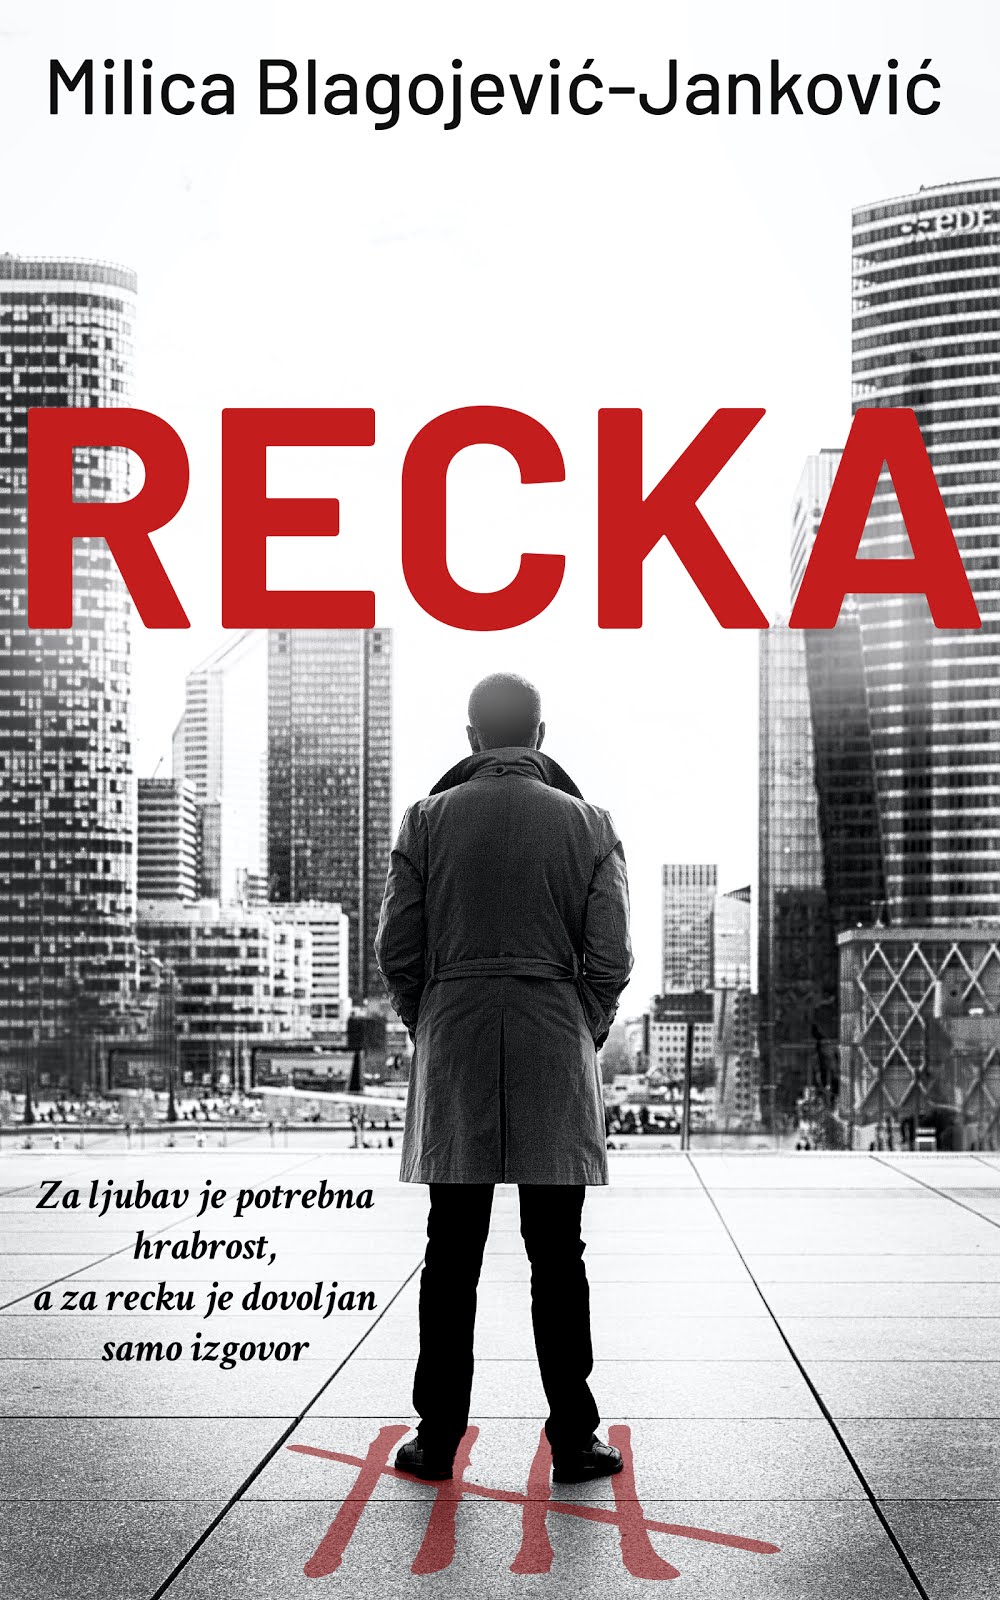 Moj najnoviji roman "RECKA" dostupan na www.kobo.com